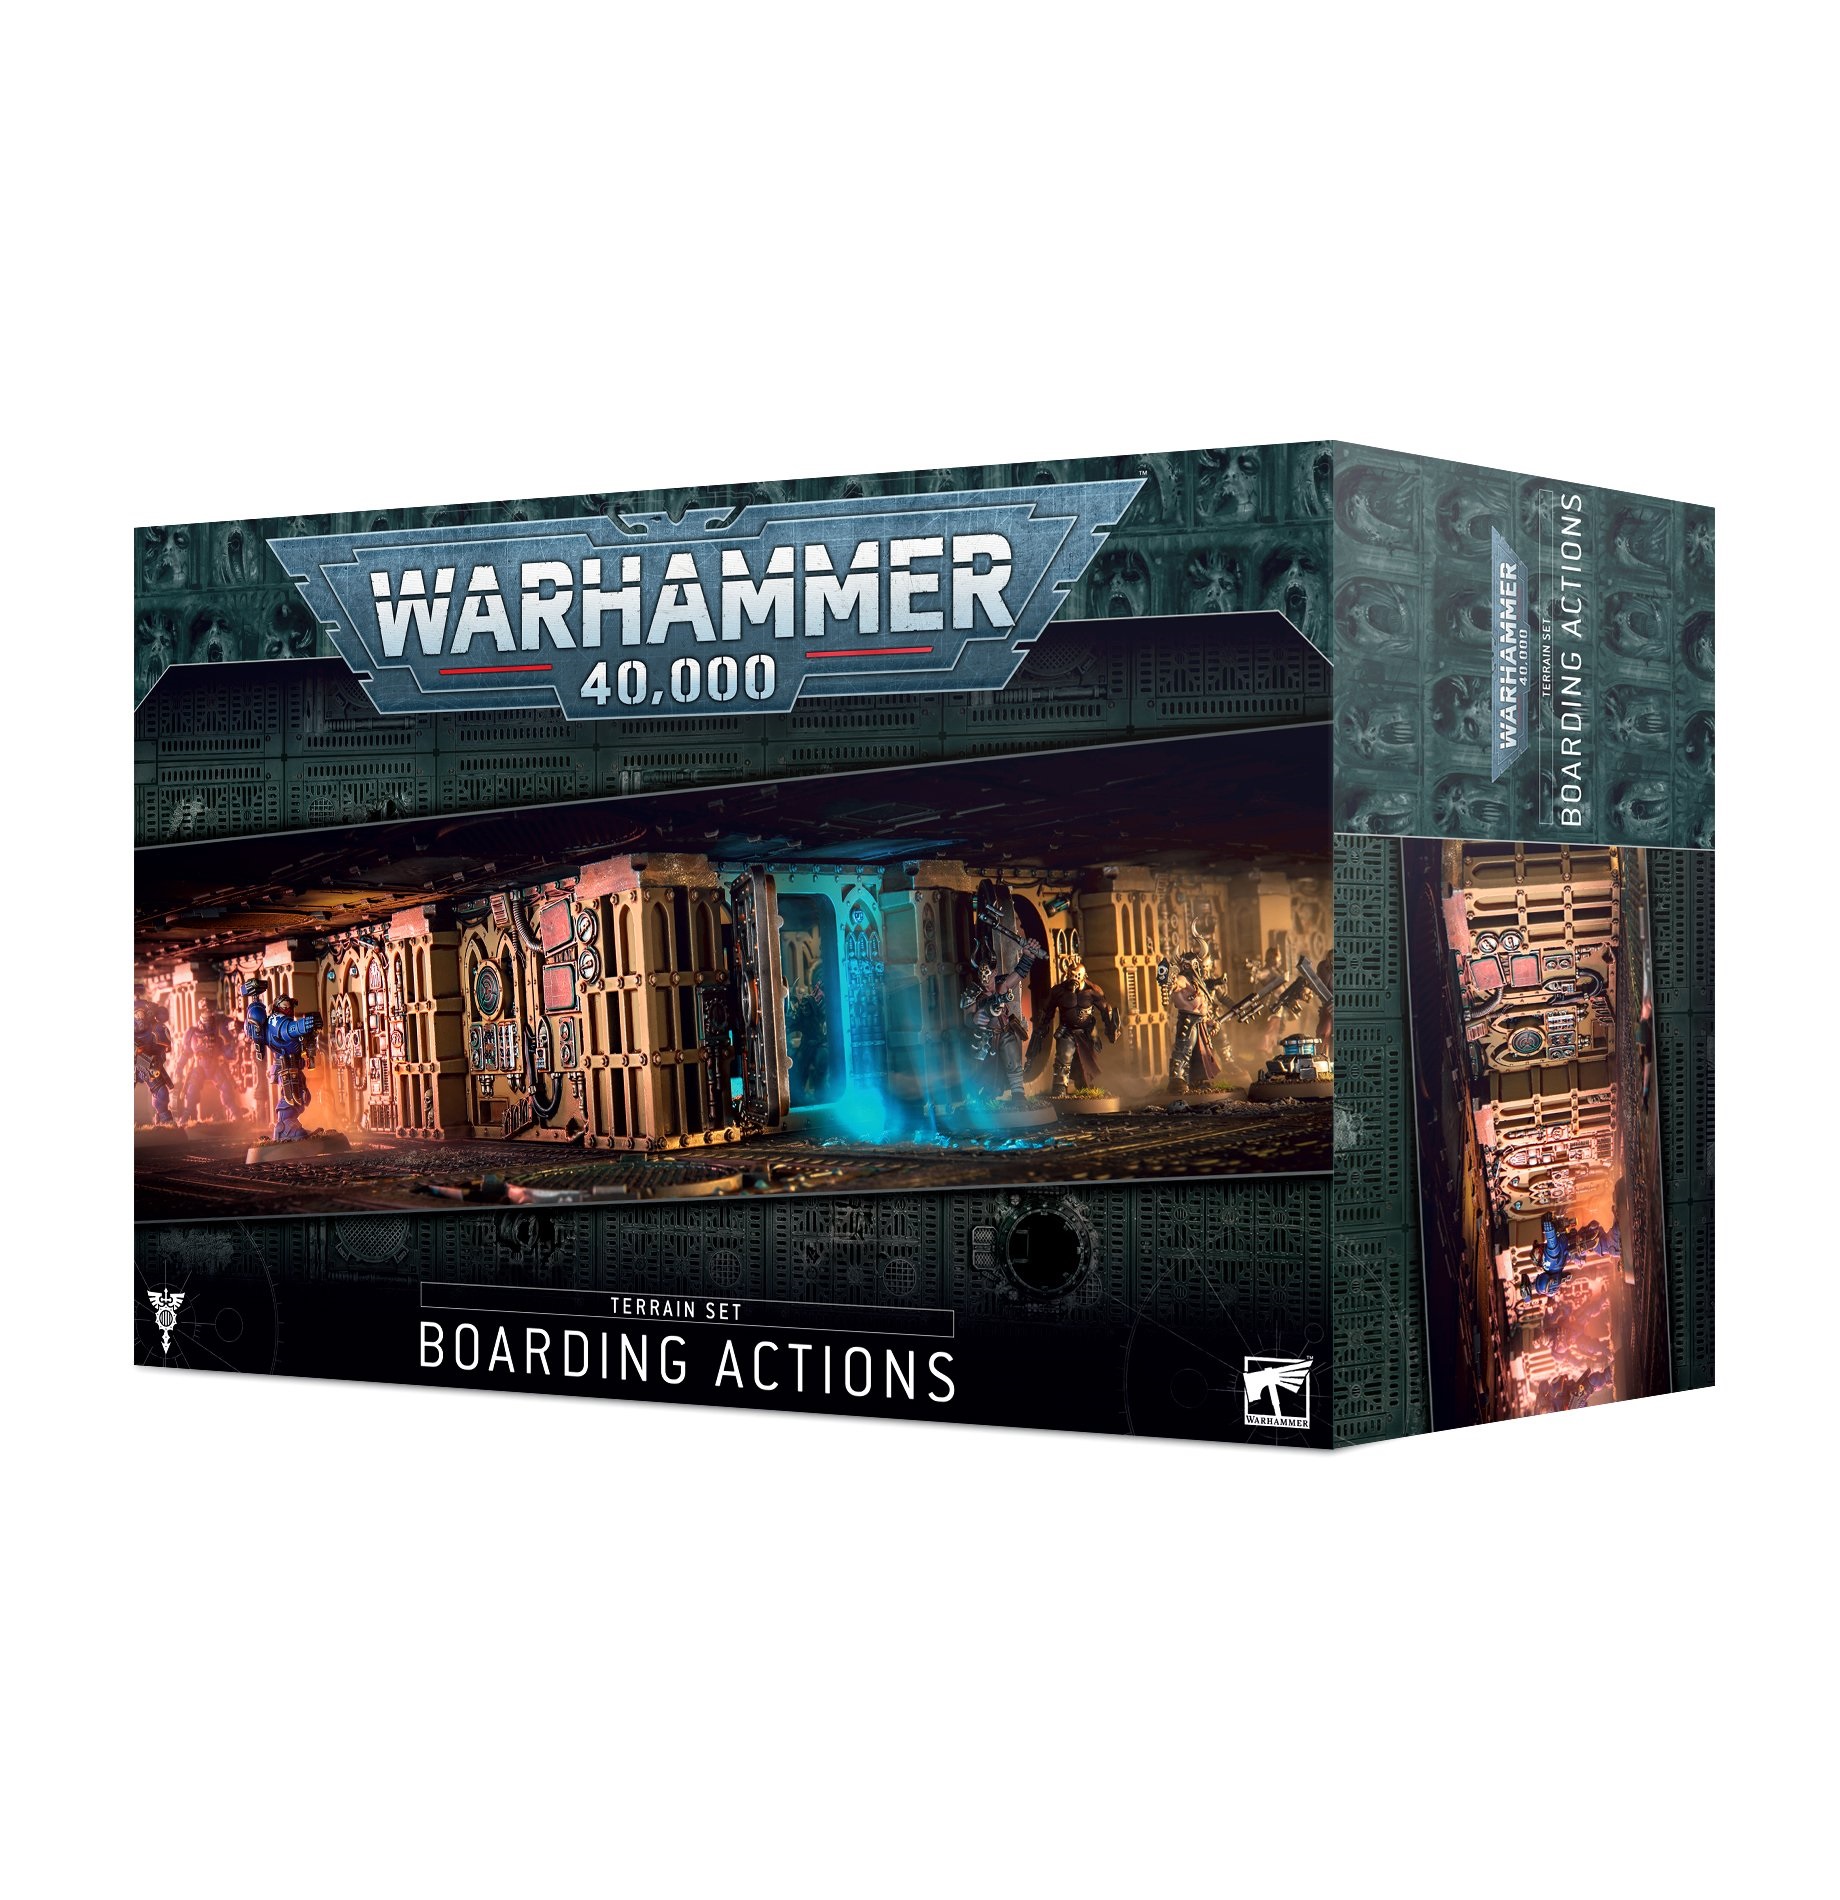 Warhammer 40000 Boarding Actions Terrain set